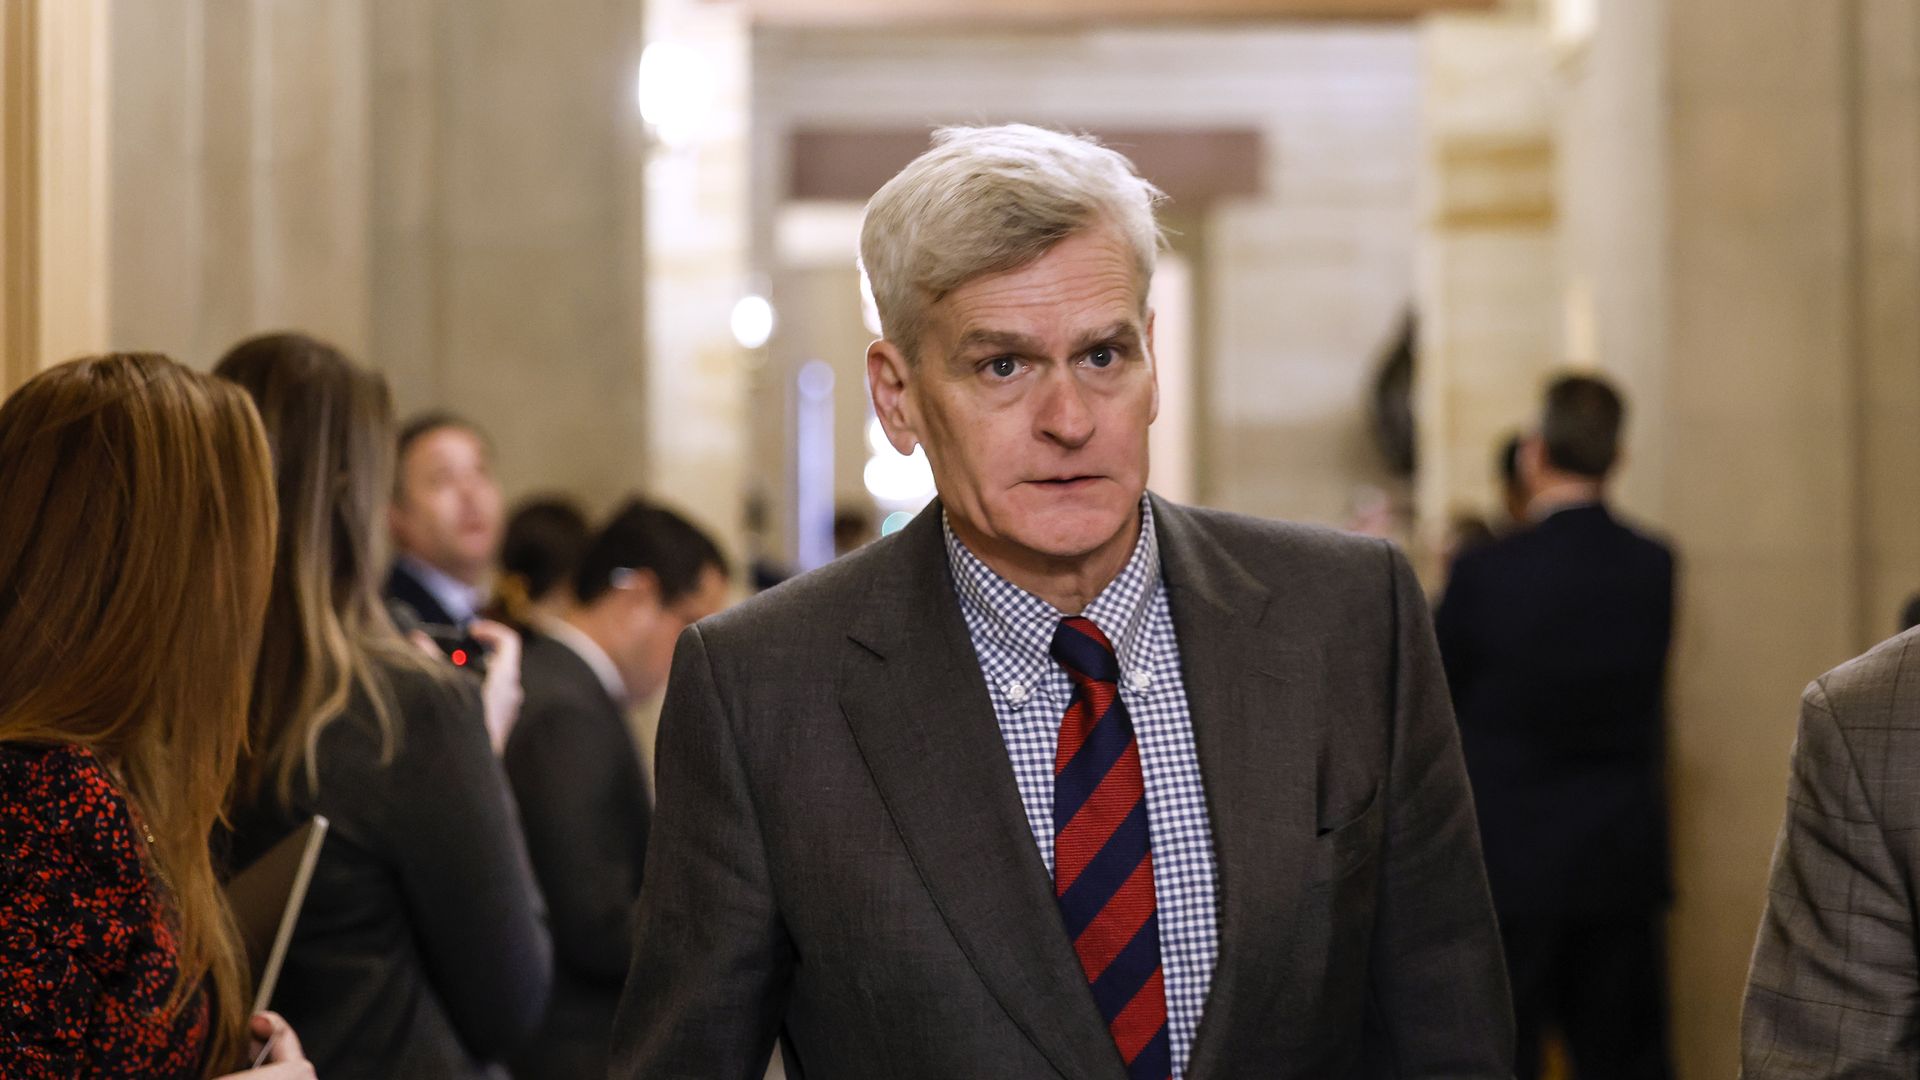 Senator Bill Cassidy walks through a hallway at the Capitol